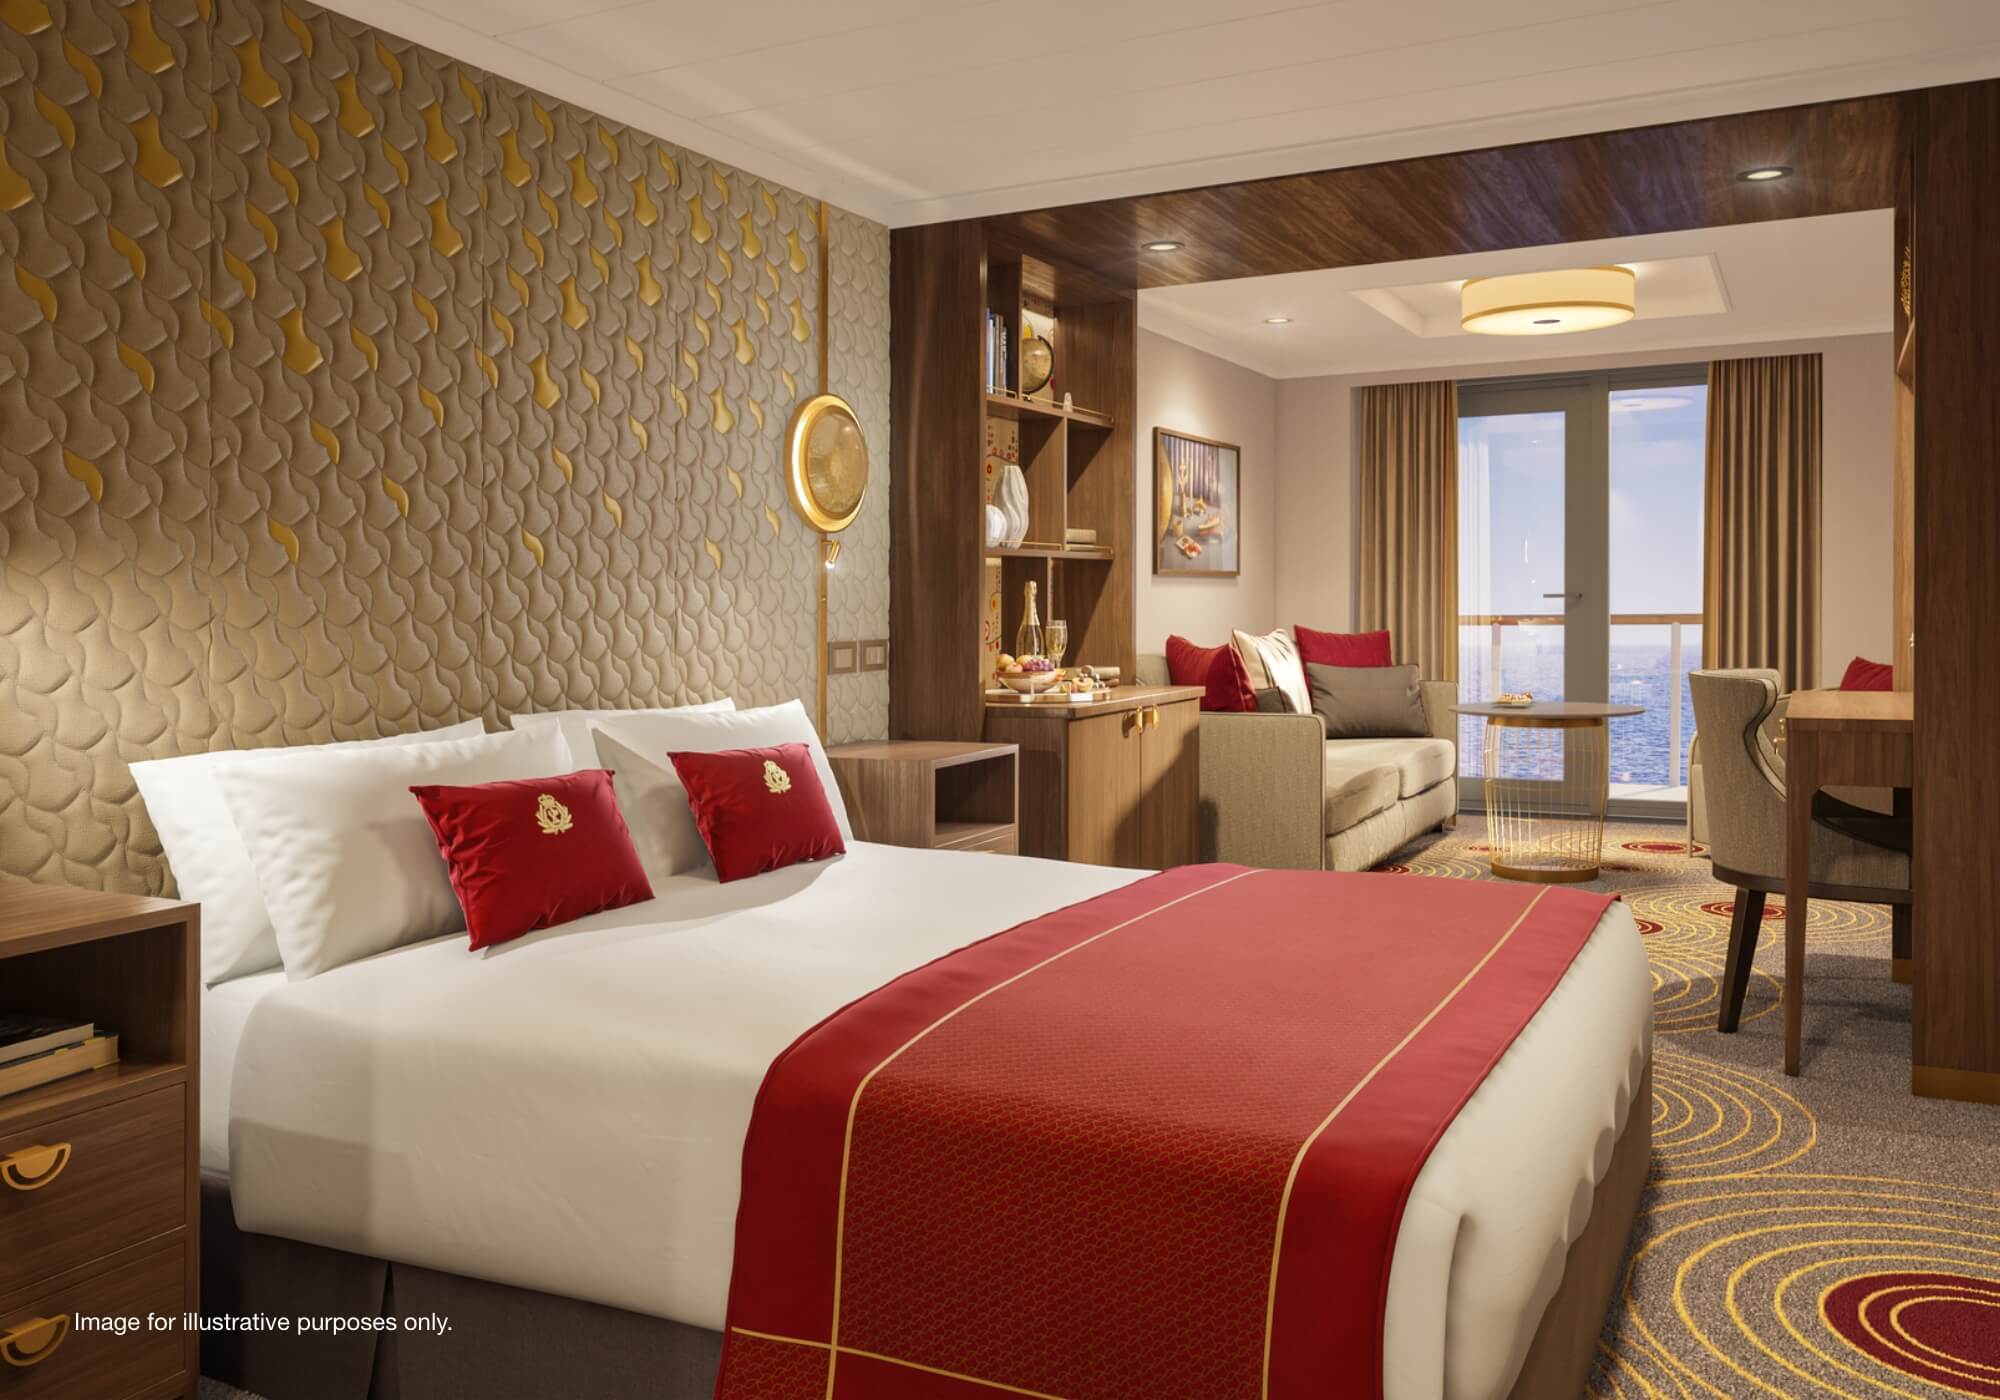 Cunard Queen Anne Suite Cabin